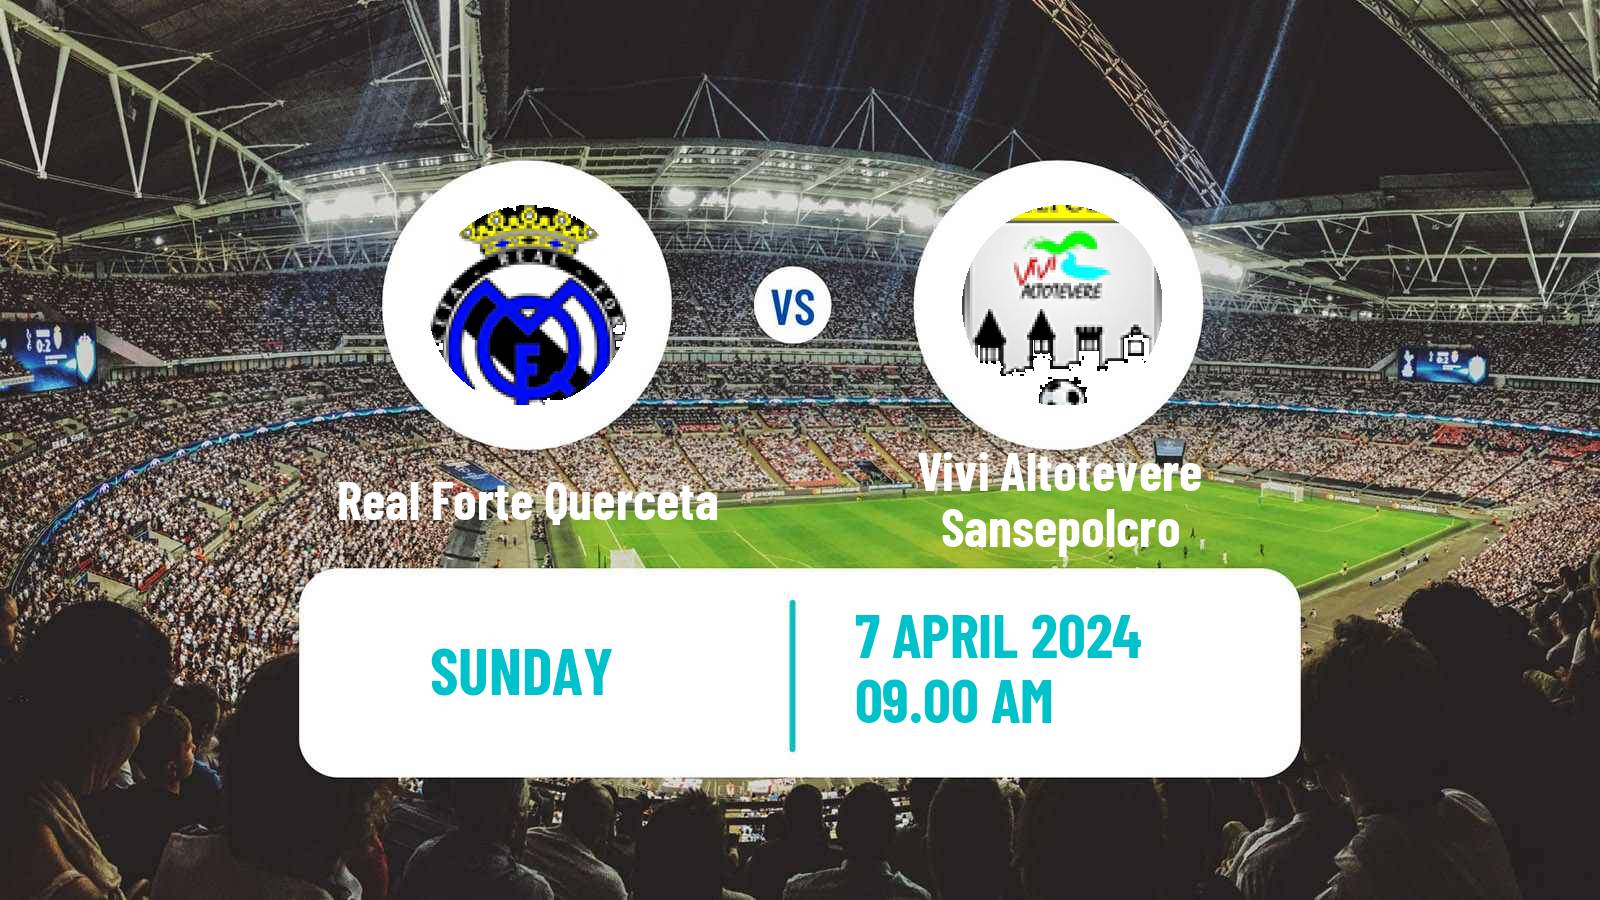 Soccer Italian Serie D - Group E Real Forte Querceta - Vivi Altotevere Sansepolcro